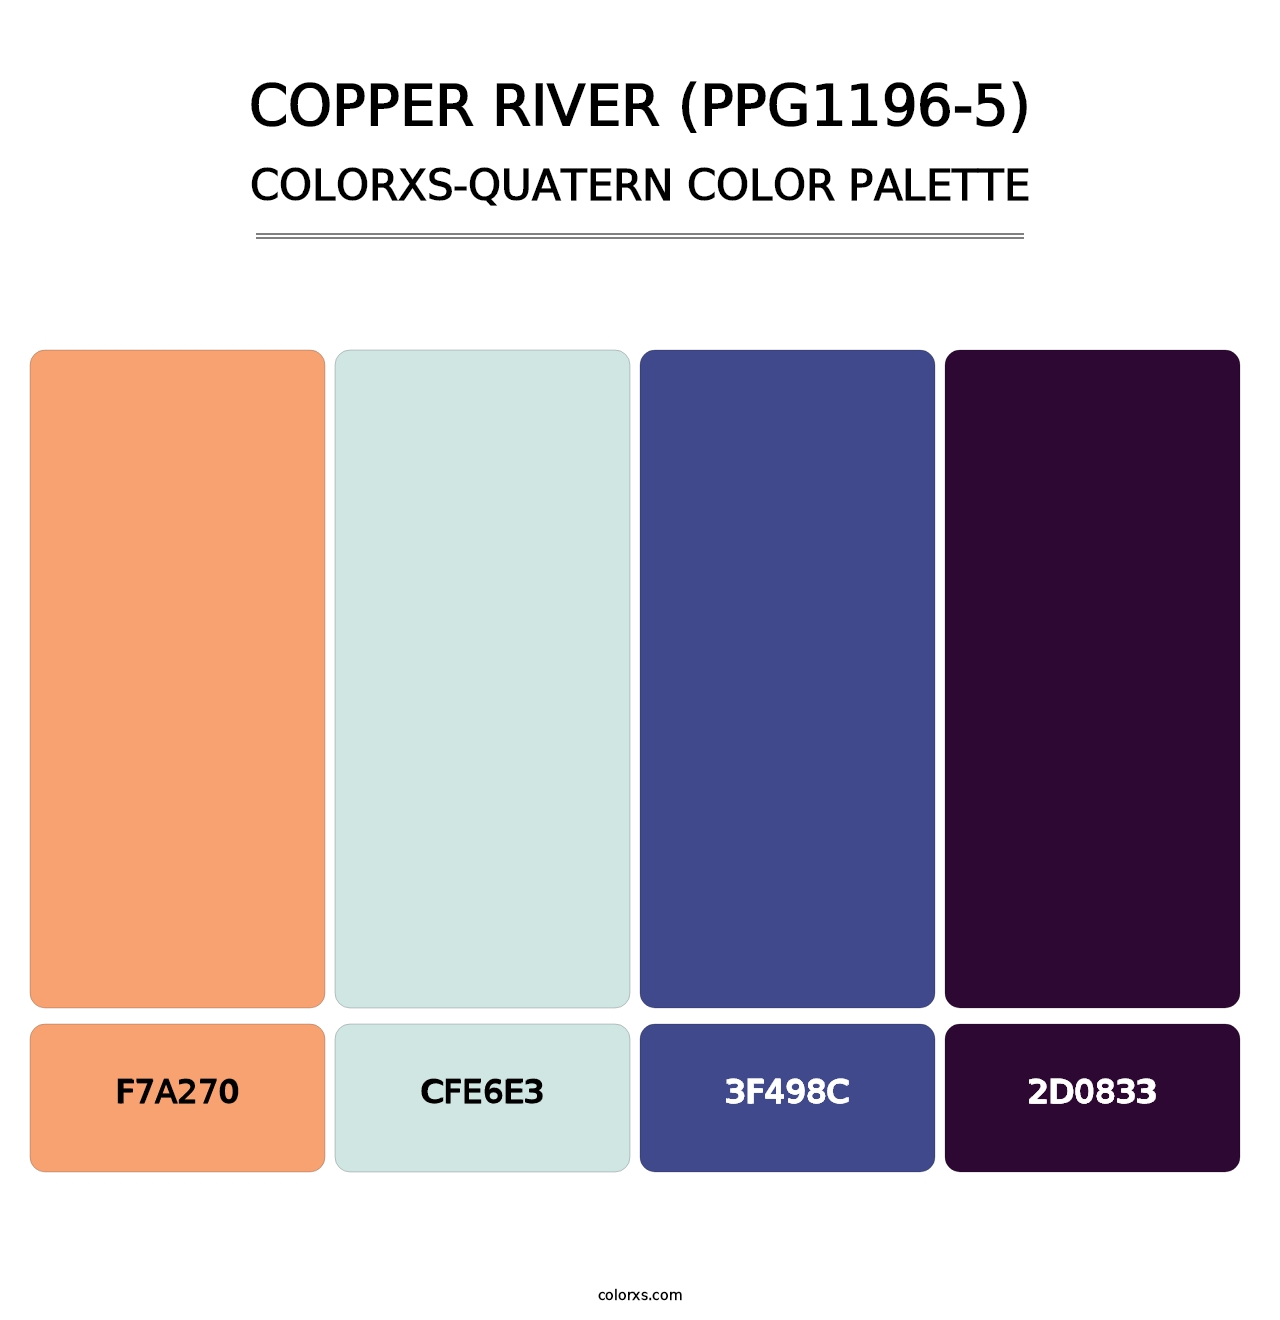 Copper River (PPG1196-5) - Colorxs Quatern Palette